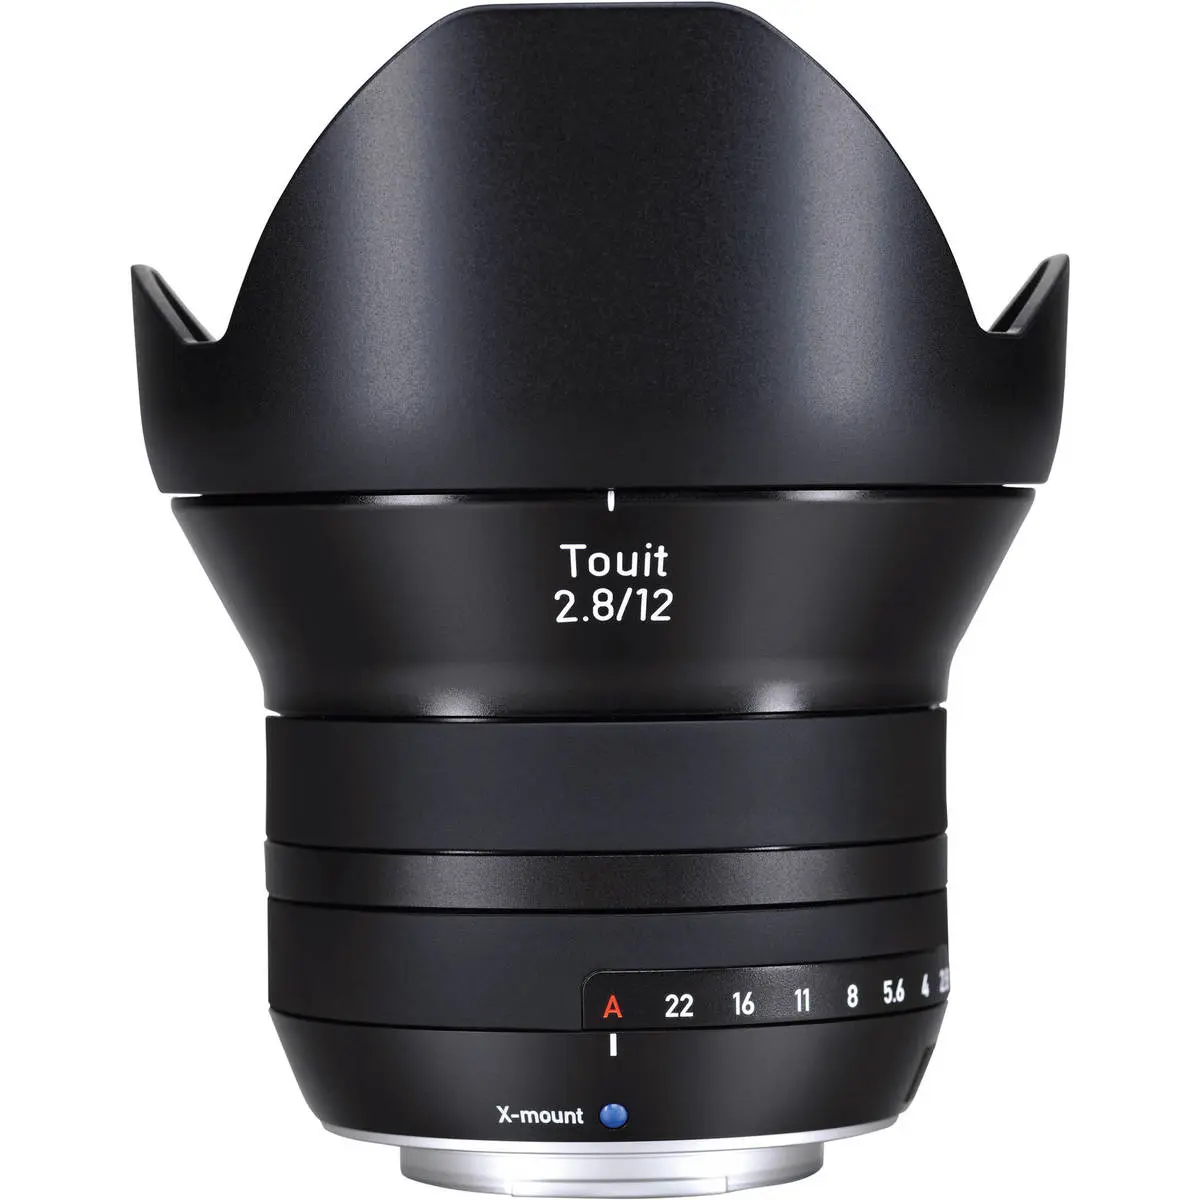 3. Carl Zeiss Touit 2.8/12 Distagon T* (Sony E) Lens